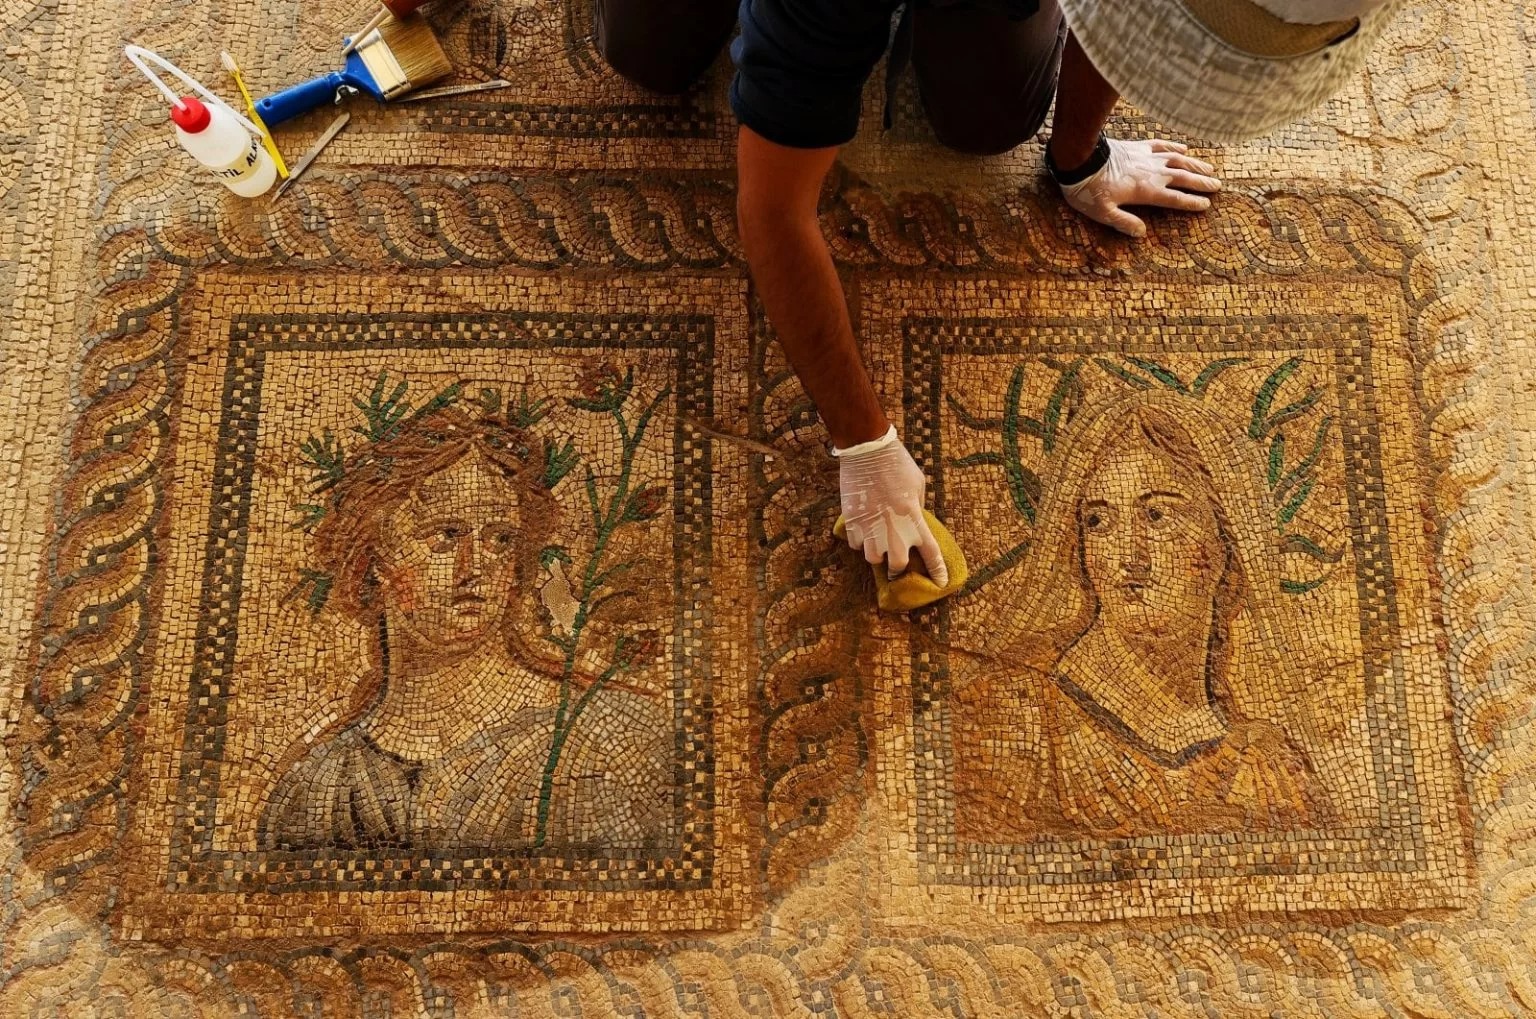 Lovingly gazing mosaics restored in Turkey’s Metropolis